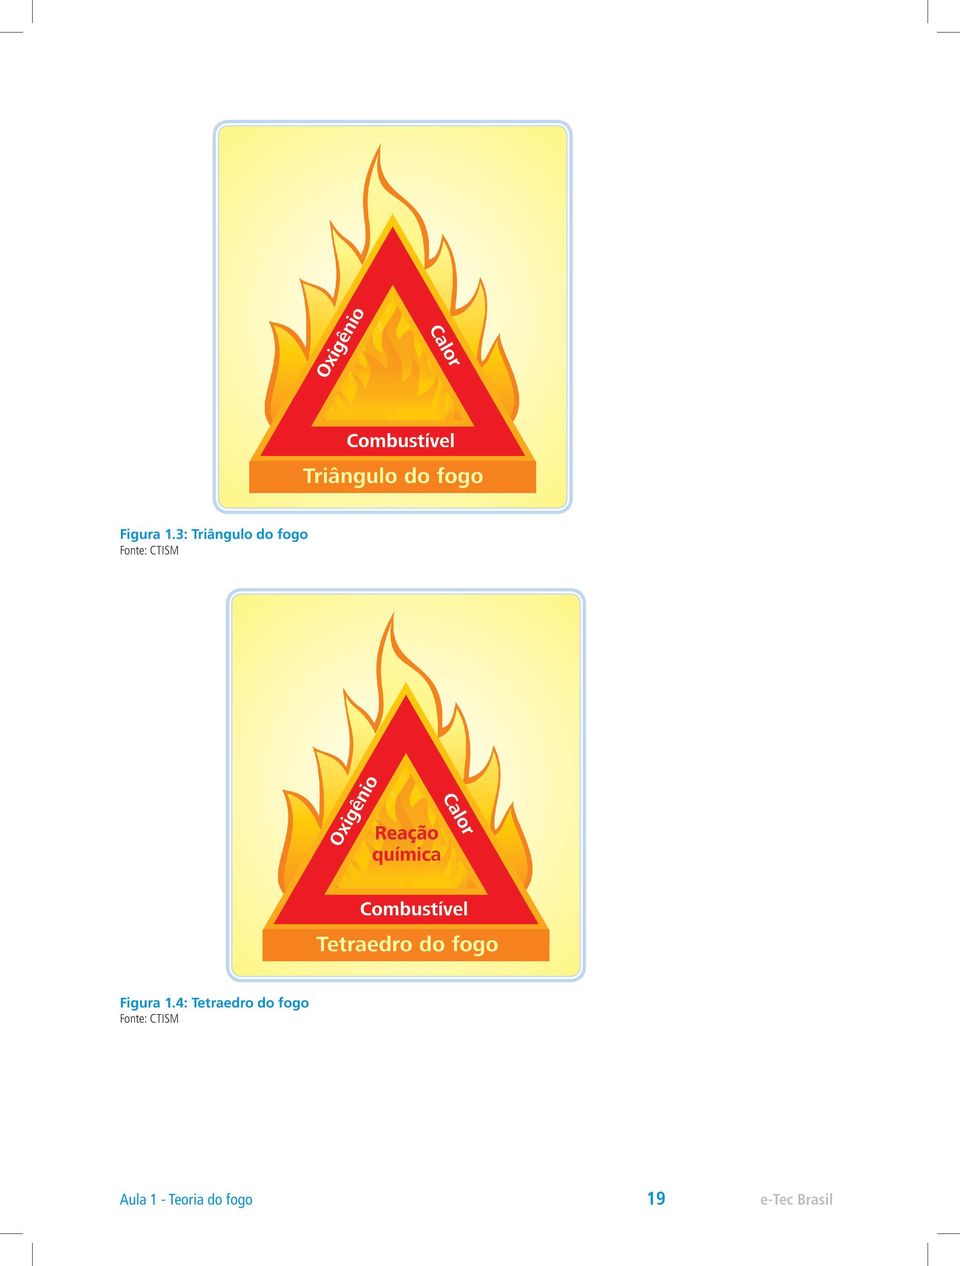 CTISM 4: Tetraedro do fogo